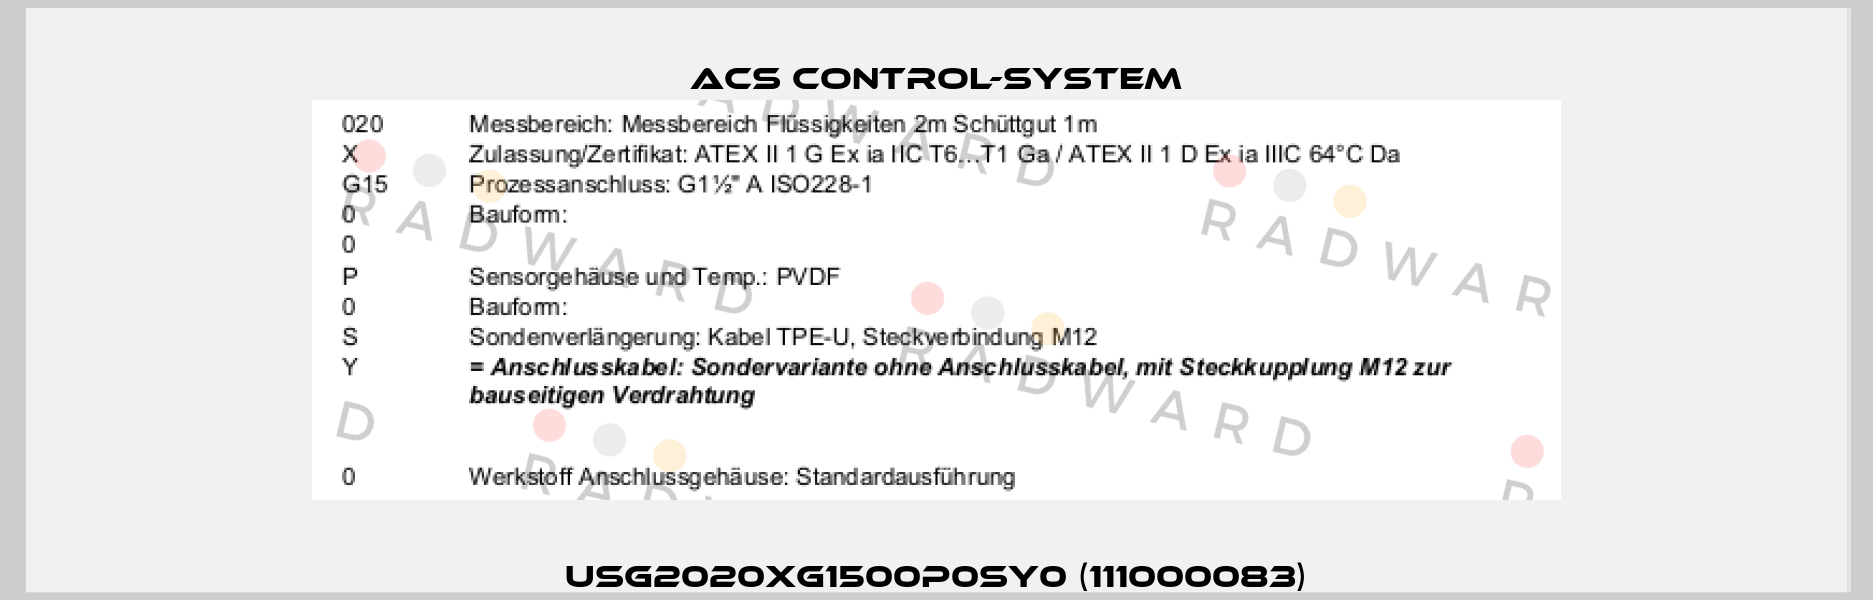 USG2020XG1500P0SY0 (111000083) Acs Control-System